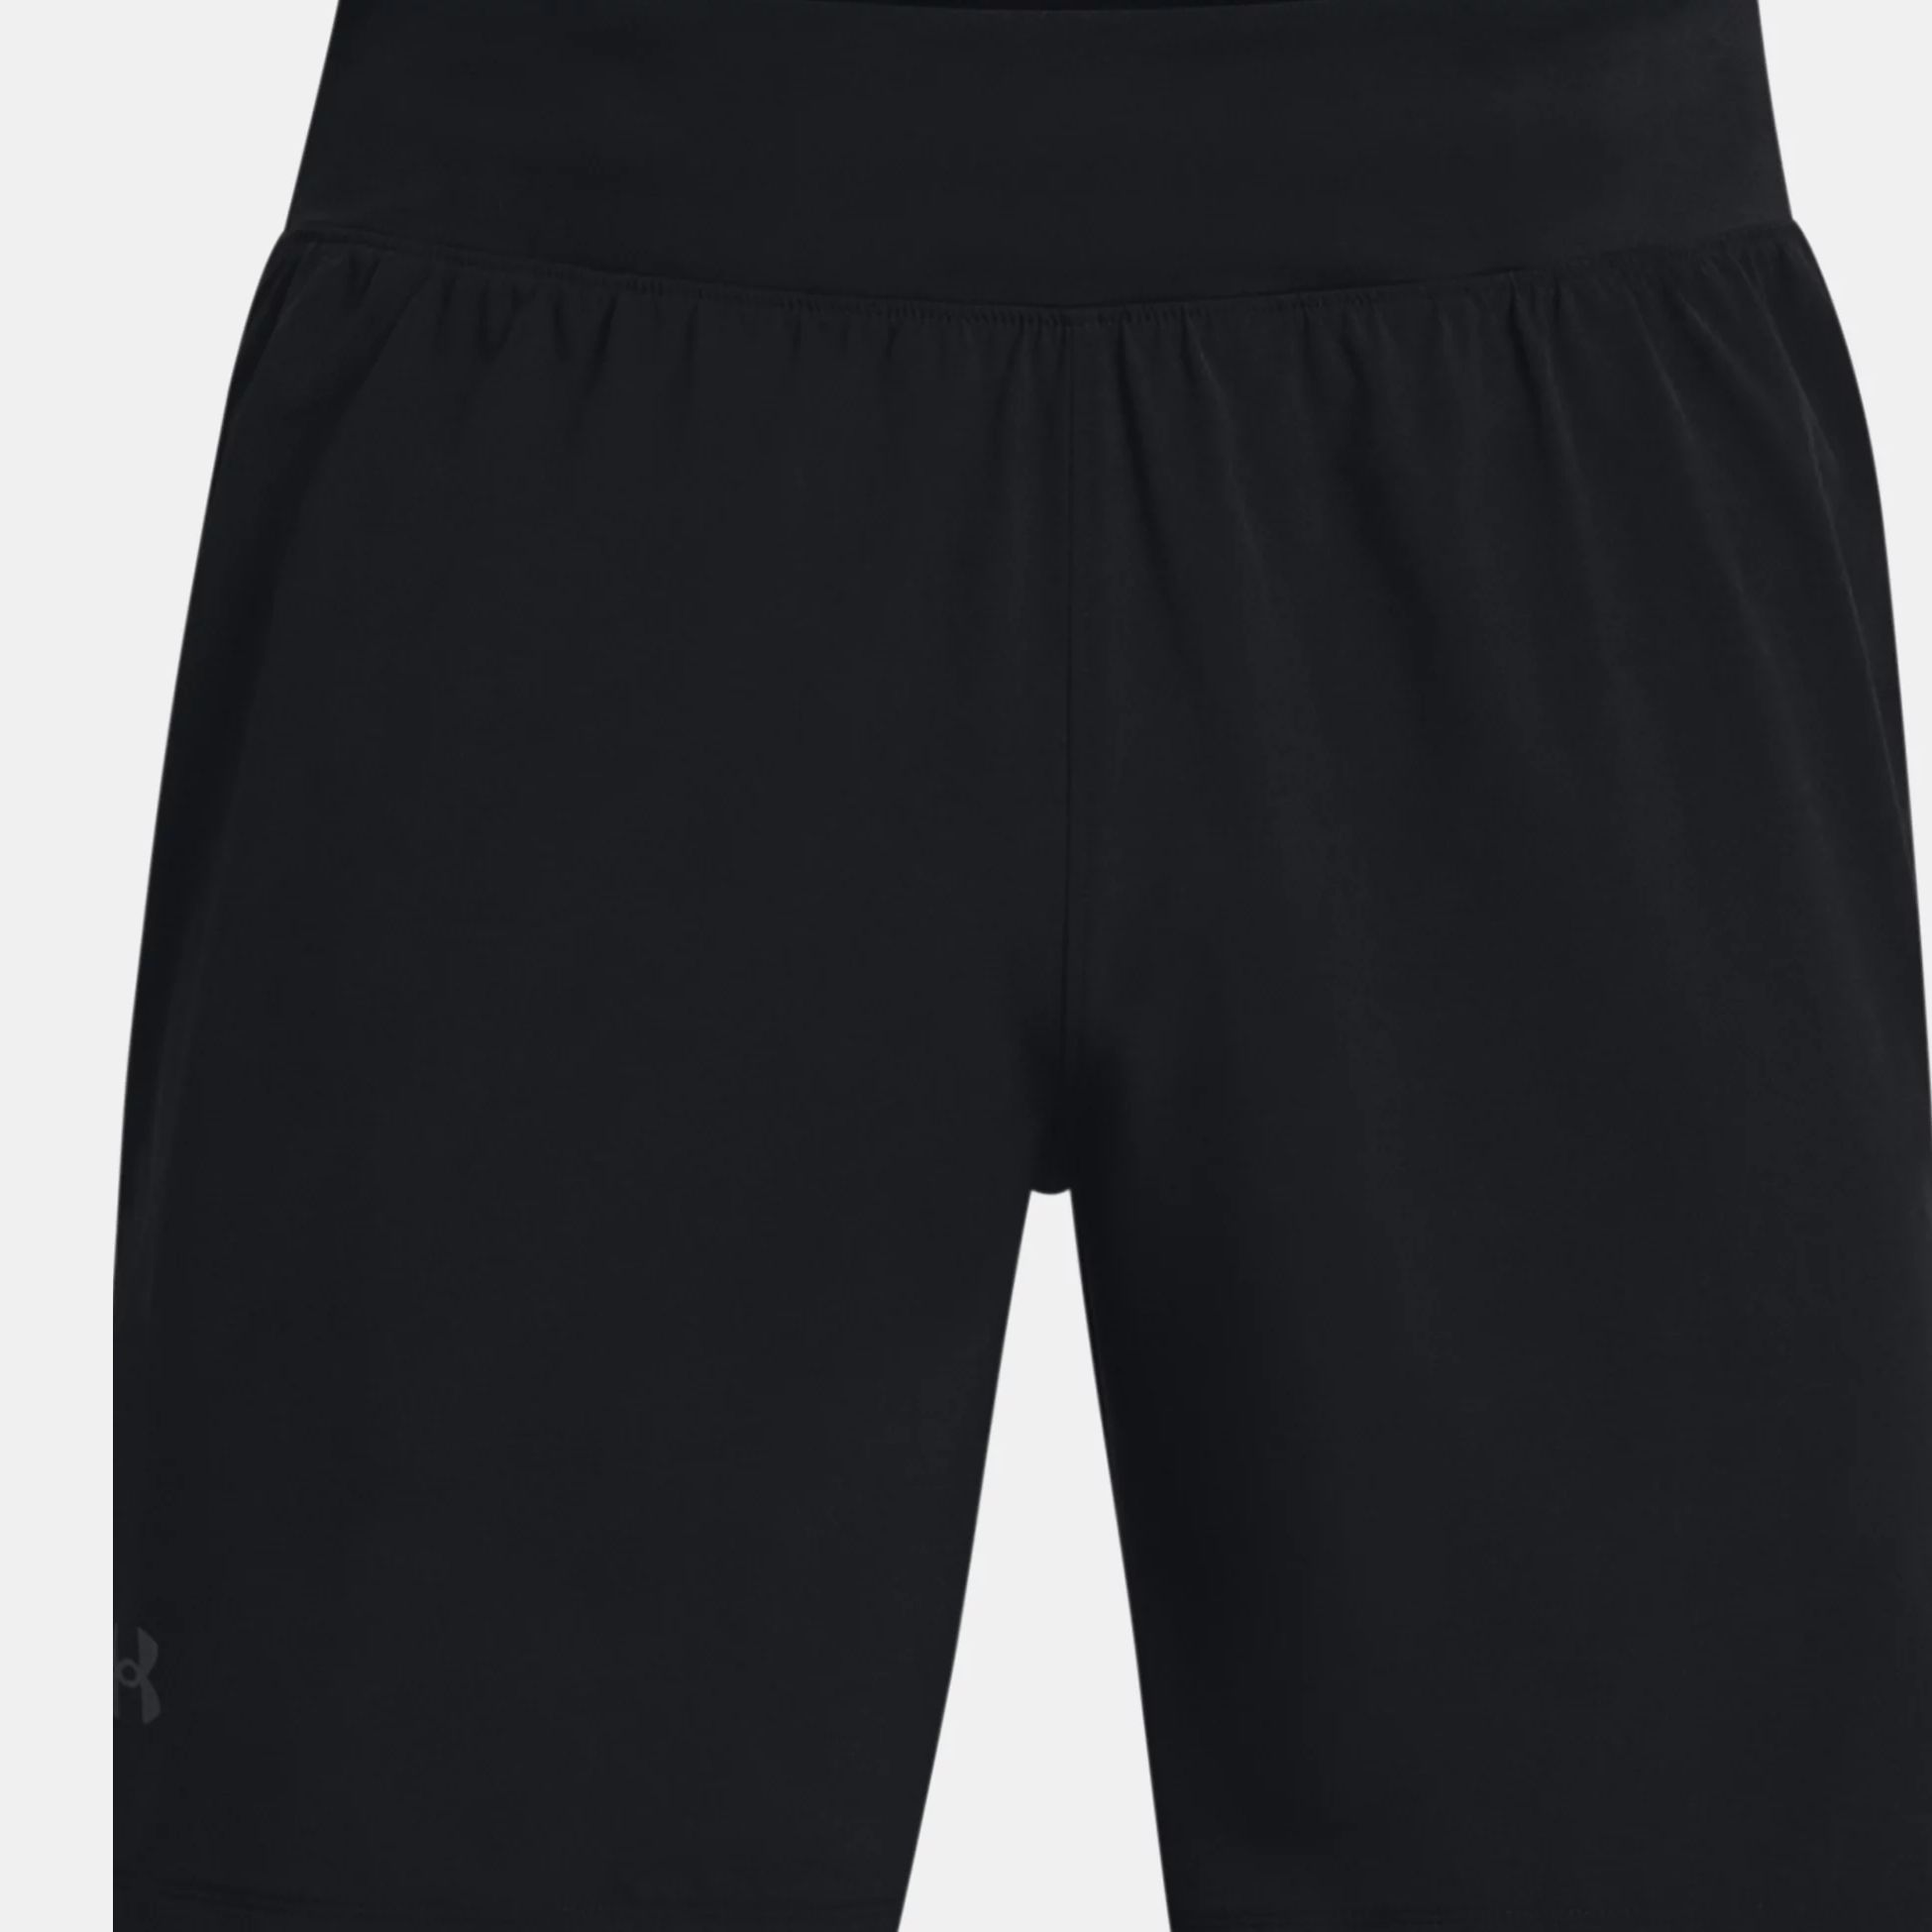 Shorts -  under armour UA Speedpocket 7 Shorts